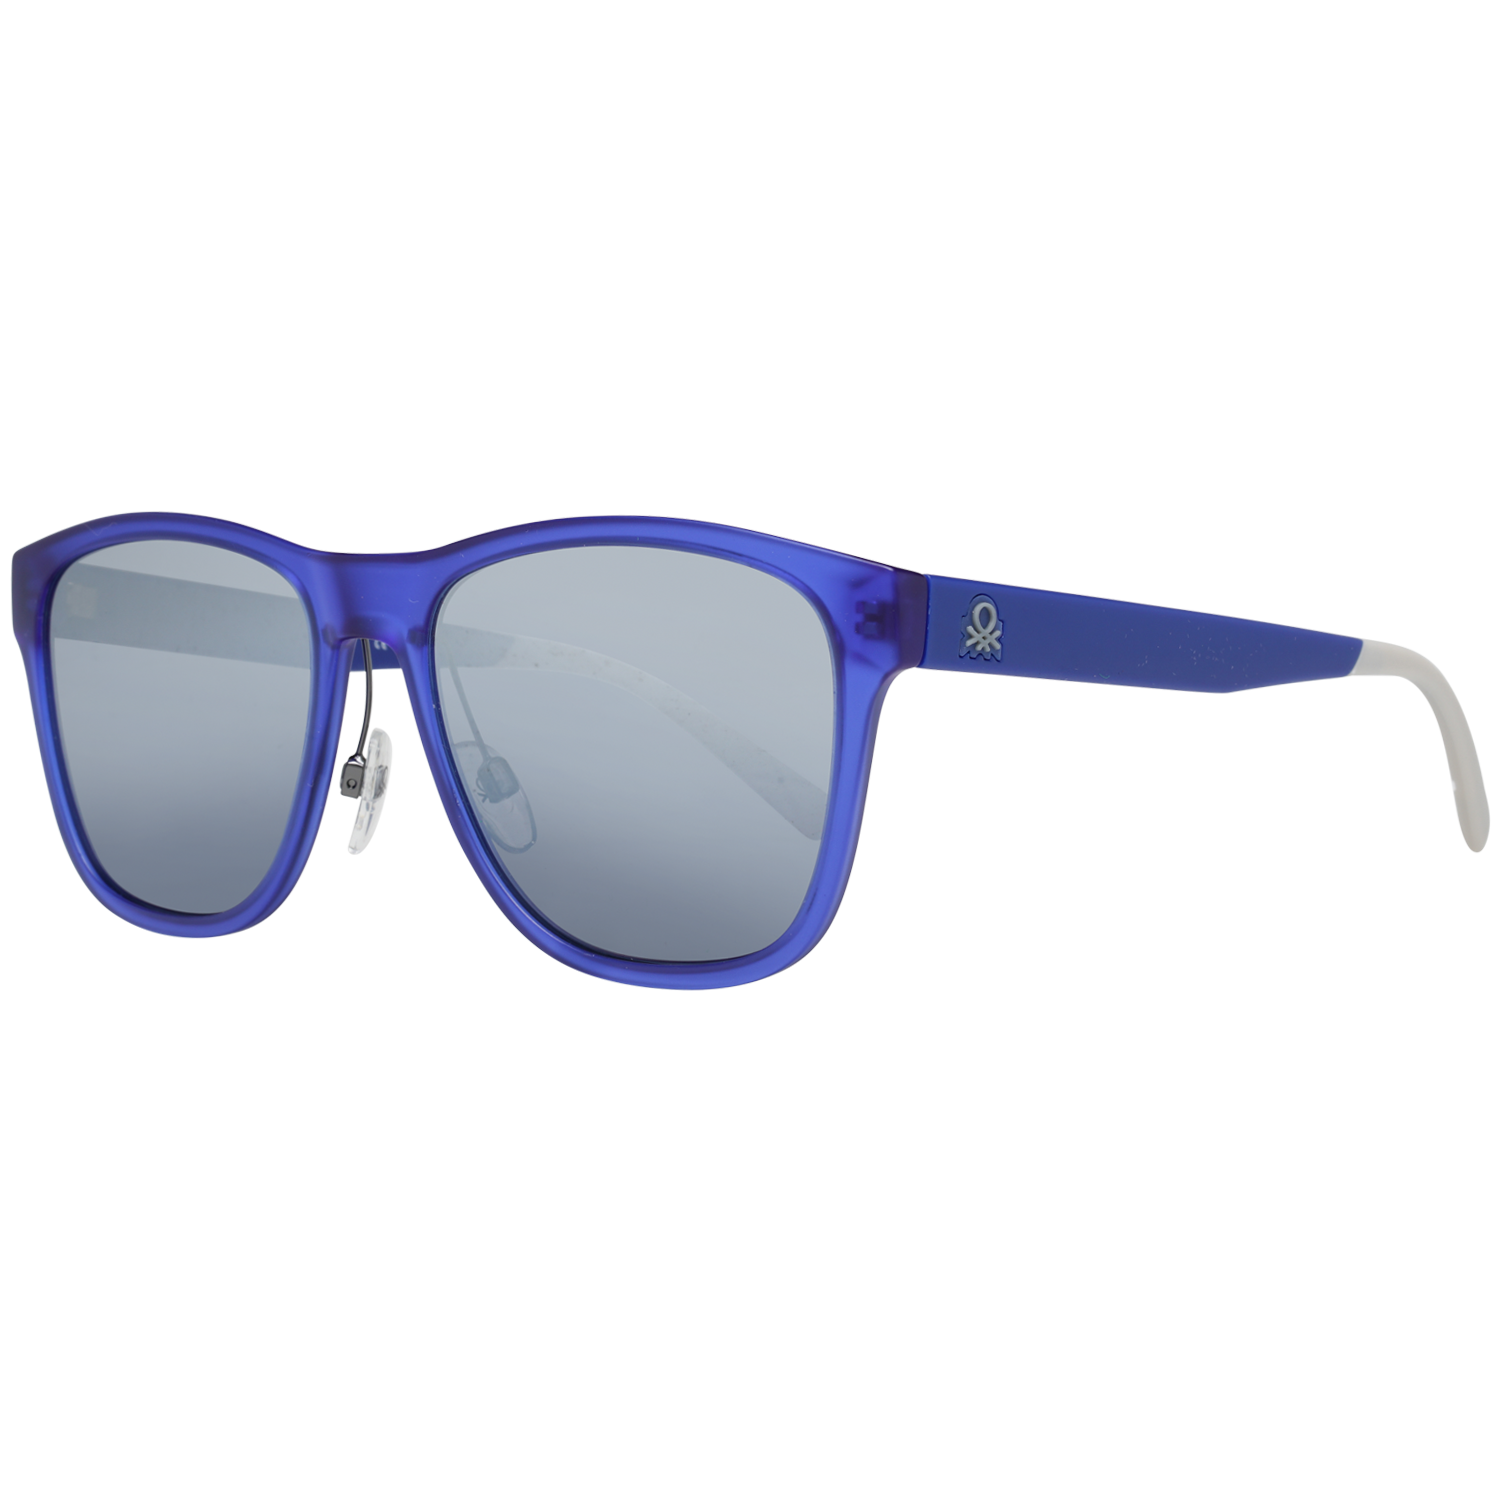 Benetton Sunglasses BE5013 603 56 Blue